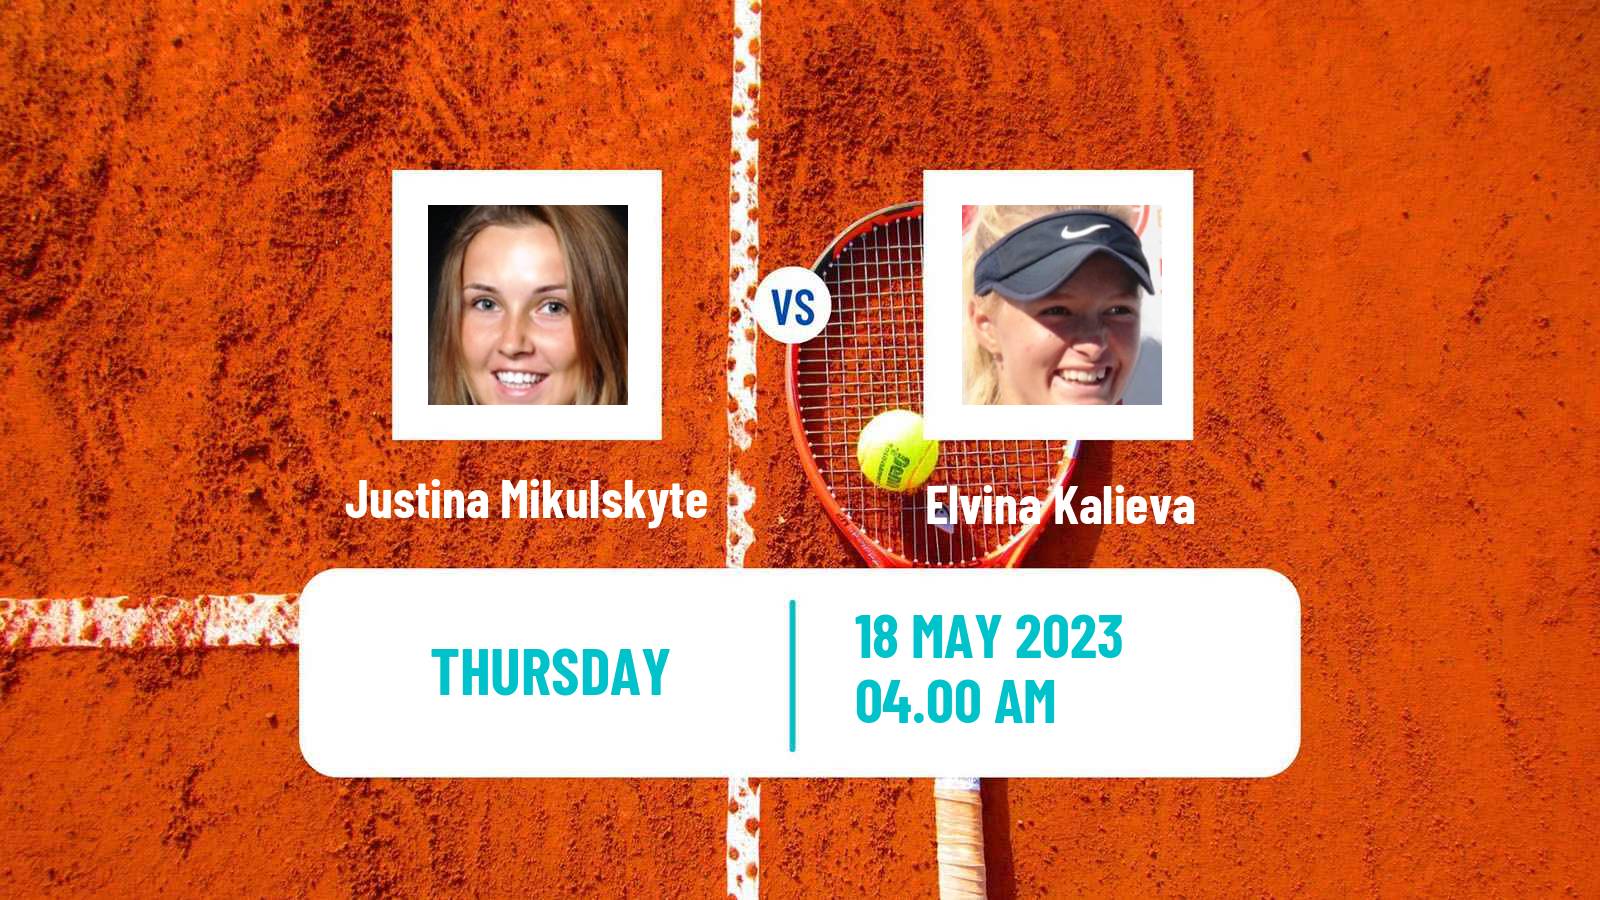 Tennis ITF W25 Feld Am See Women Justina Mikulskyte - Elvina Kalieva